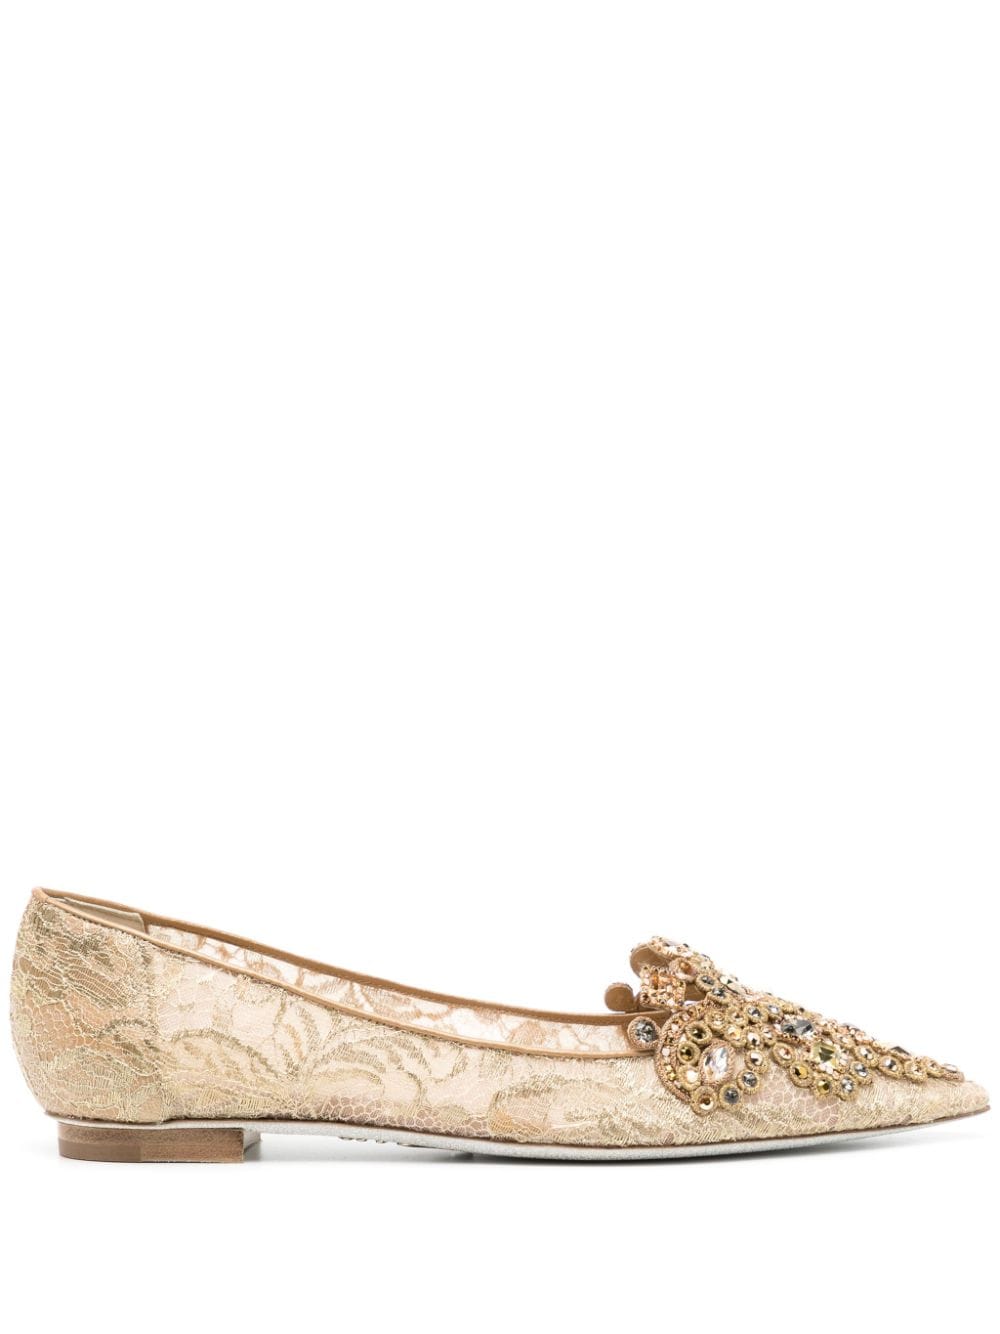 René Caovilla crystal-embellished lace ballerina shoes - Gold von René Caovilla